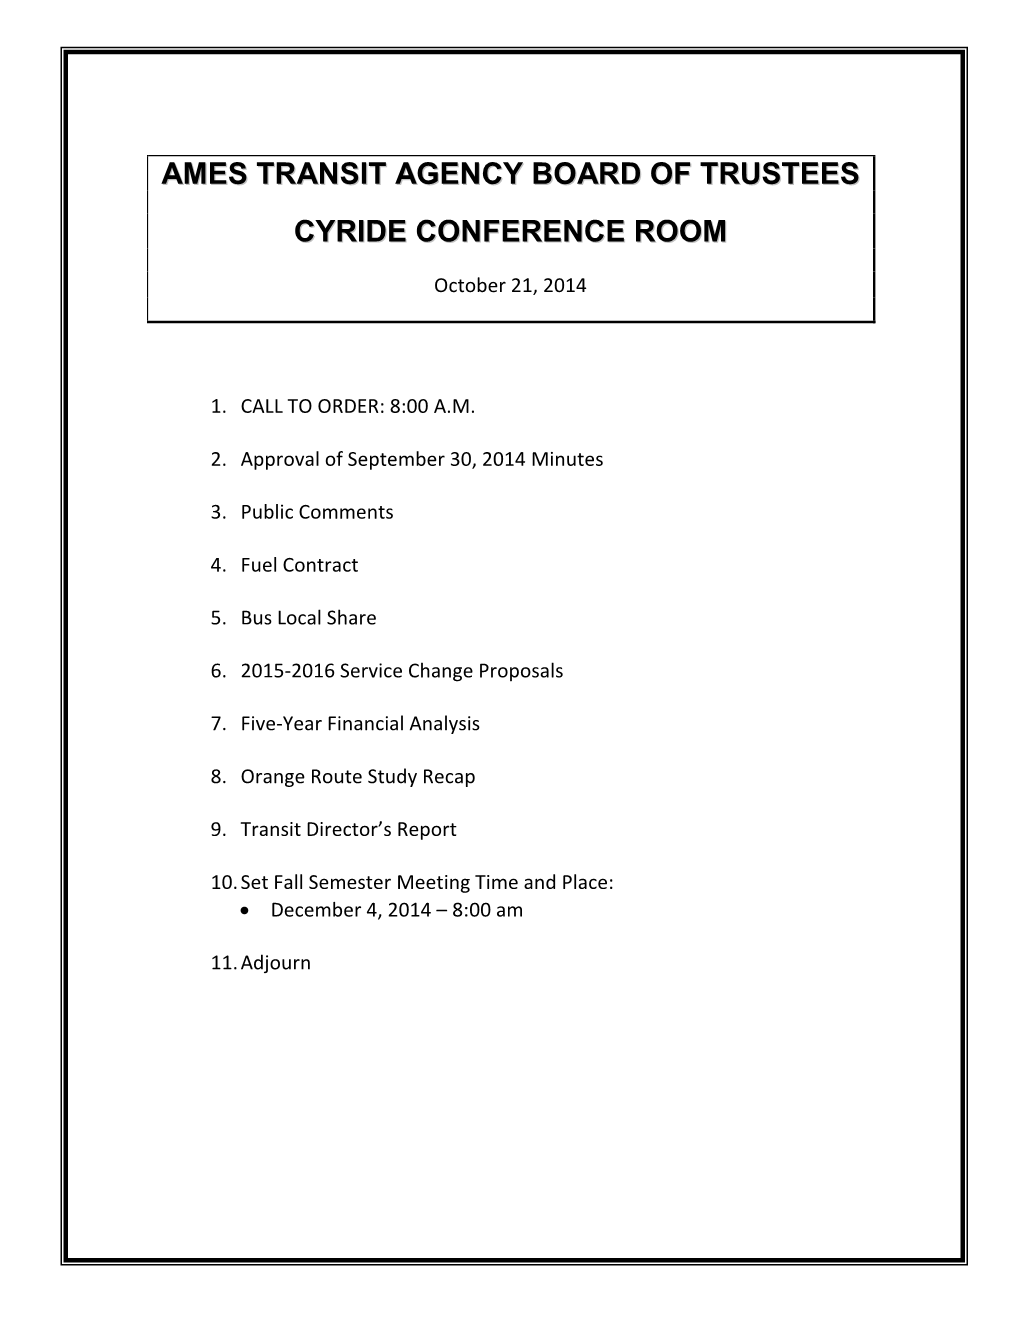 Ames Transit Agency Board of Trustees Cyride